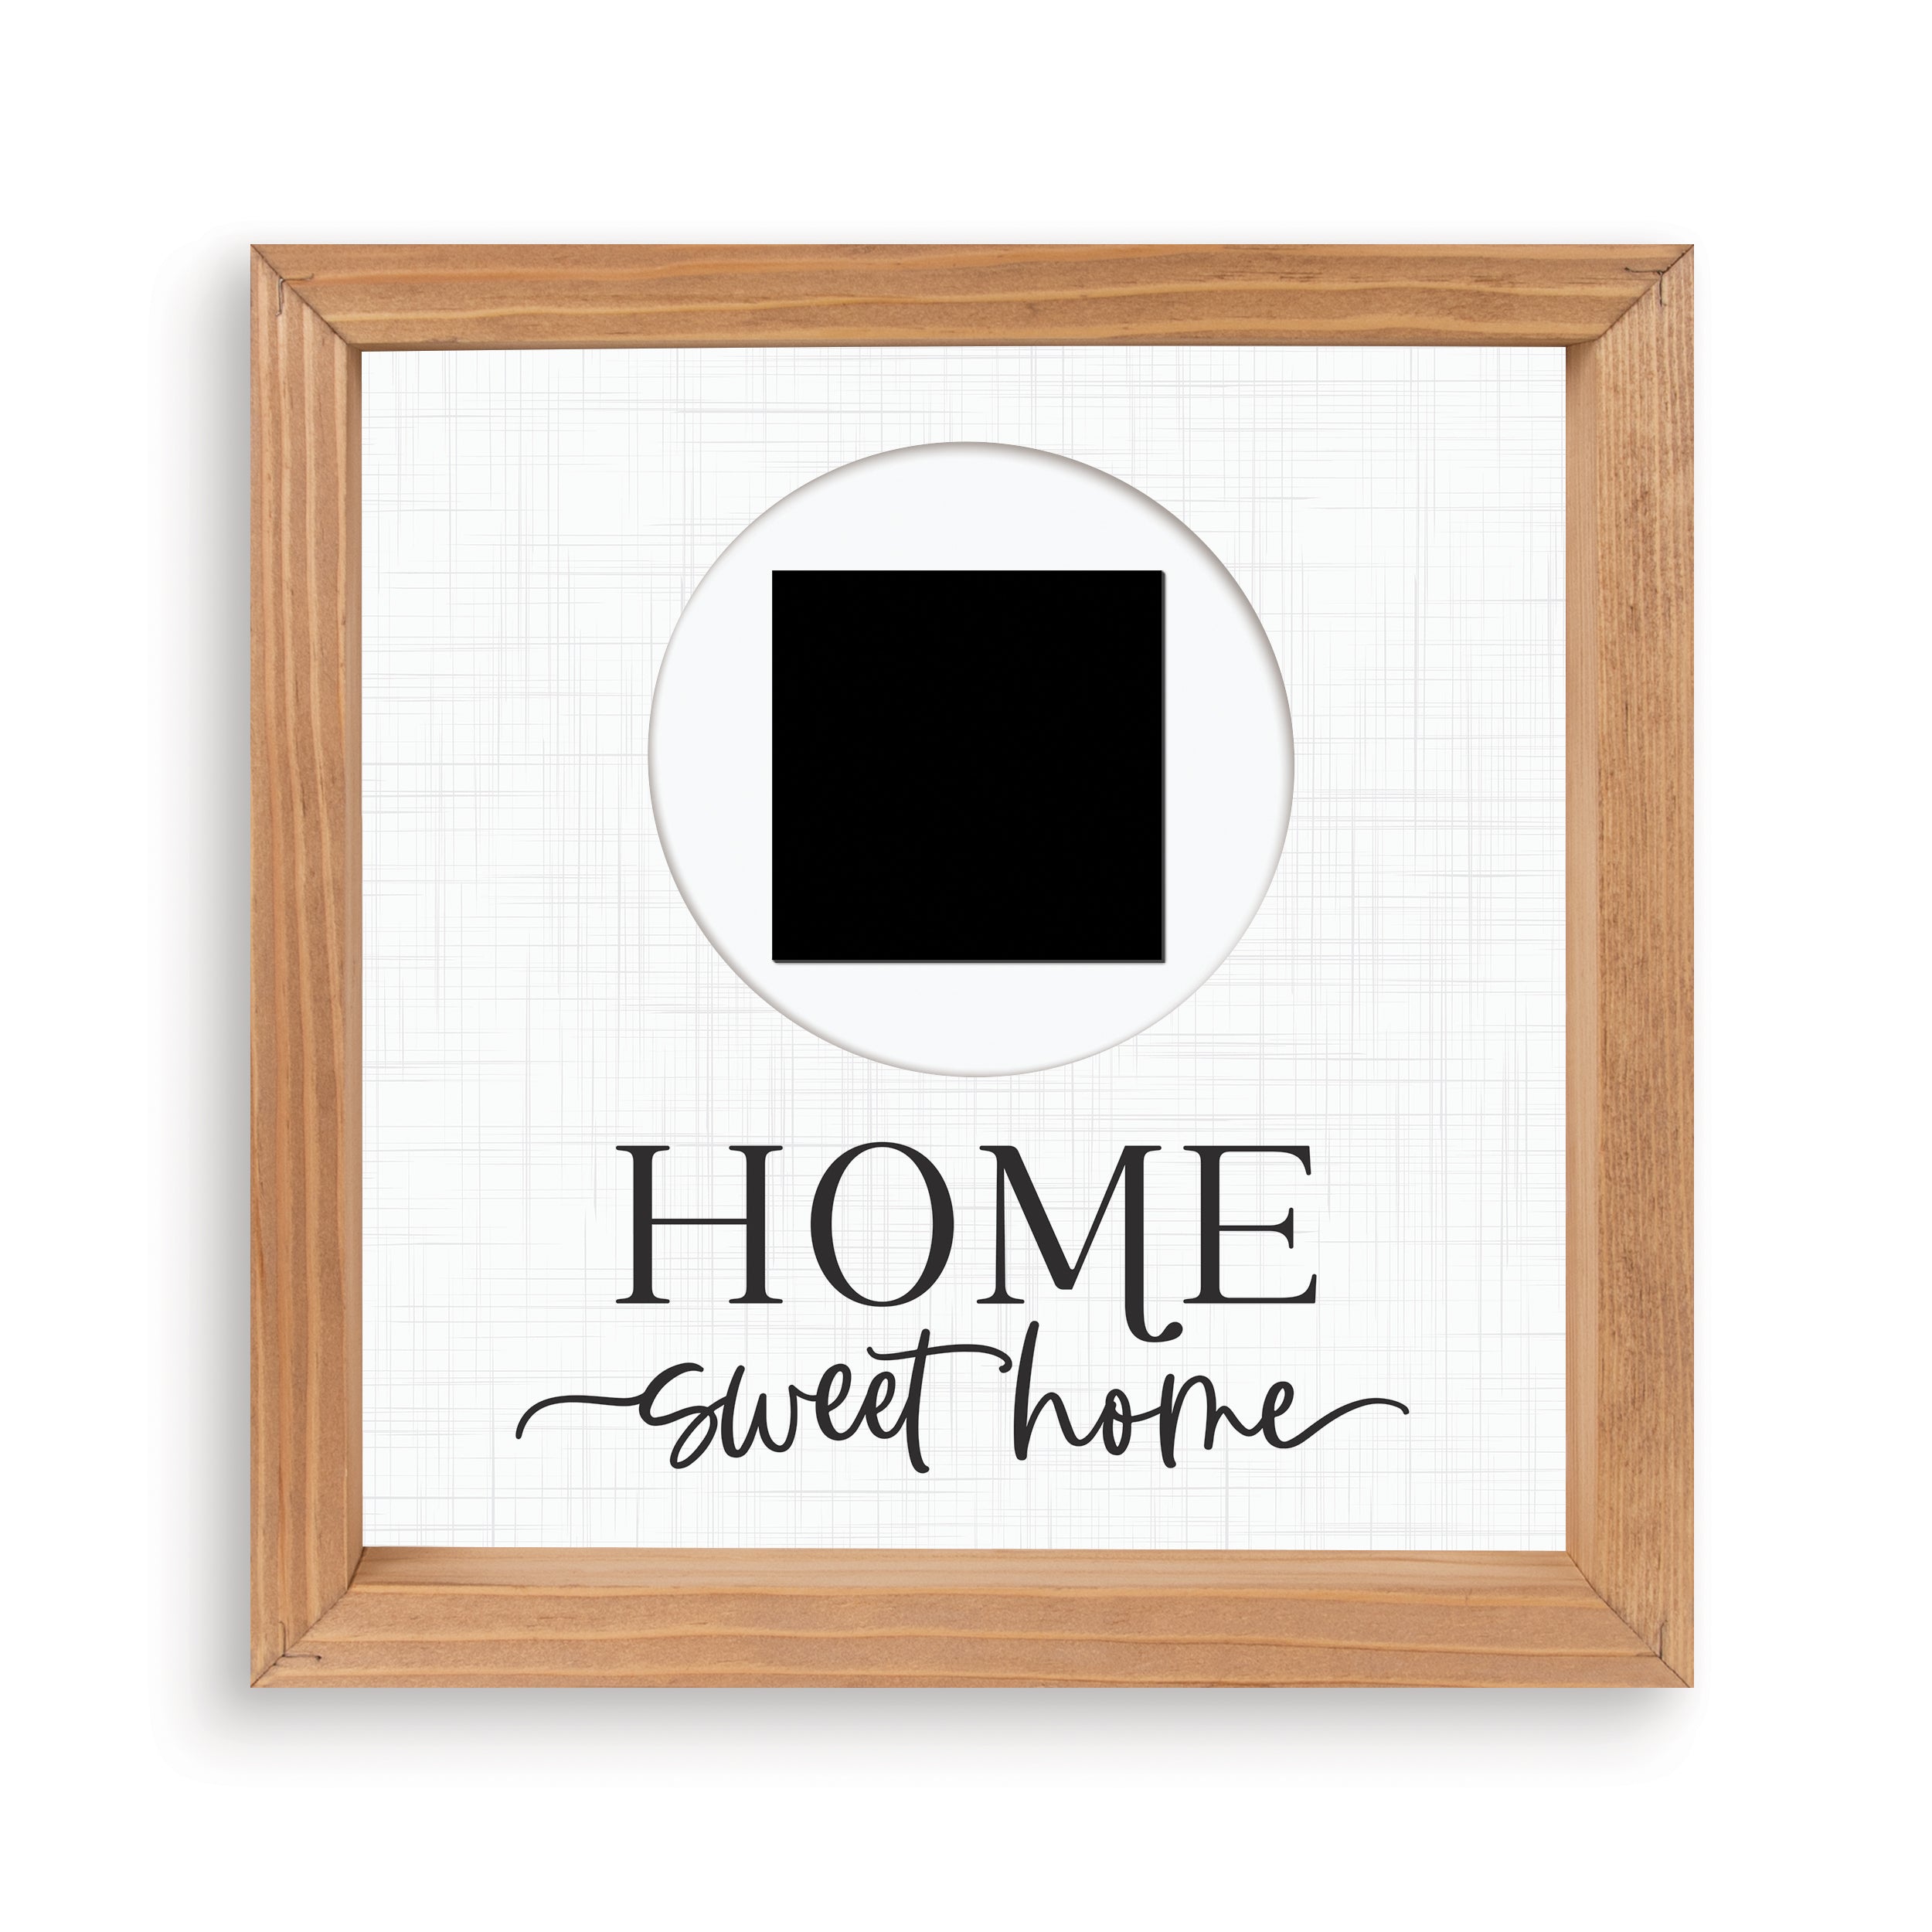 Home Sweet Home Switcheroo Sign